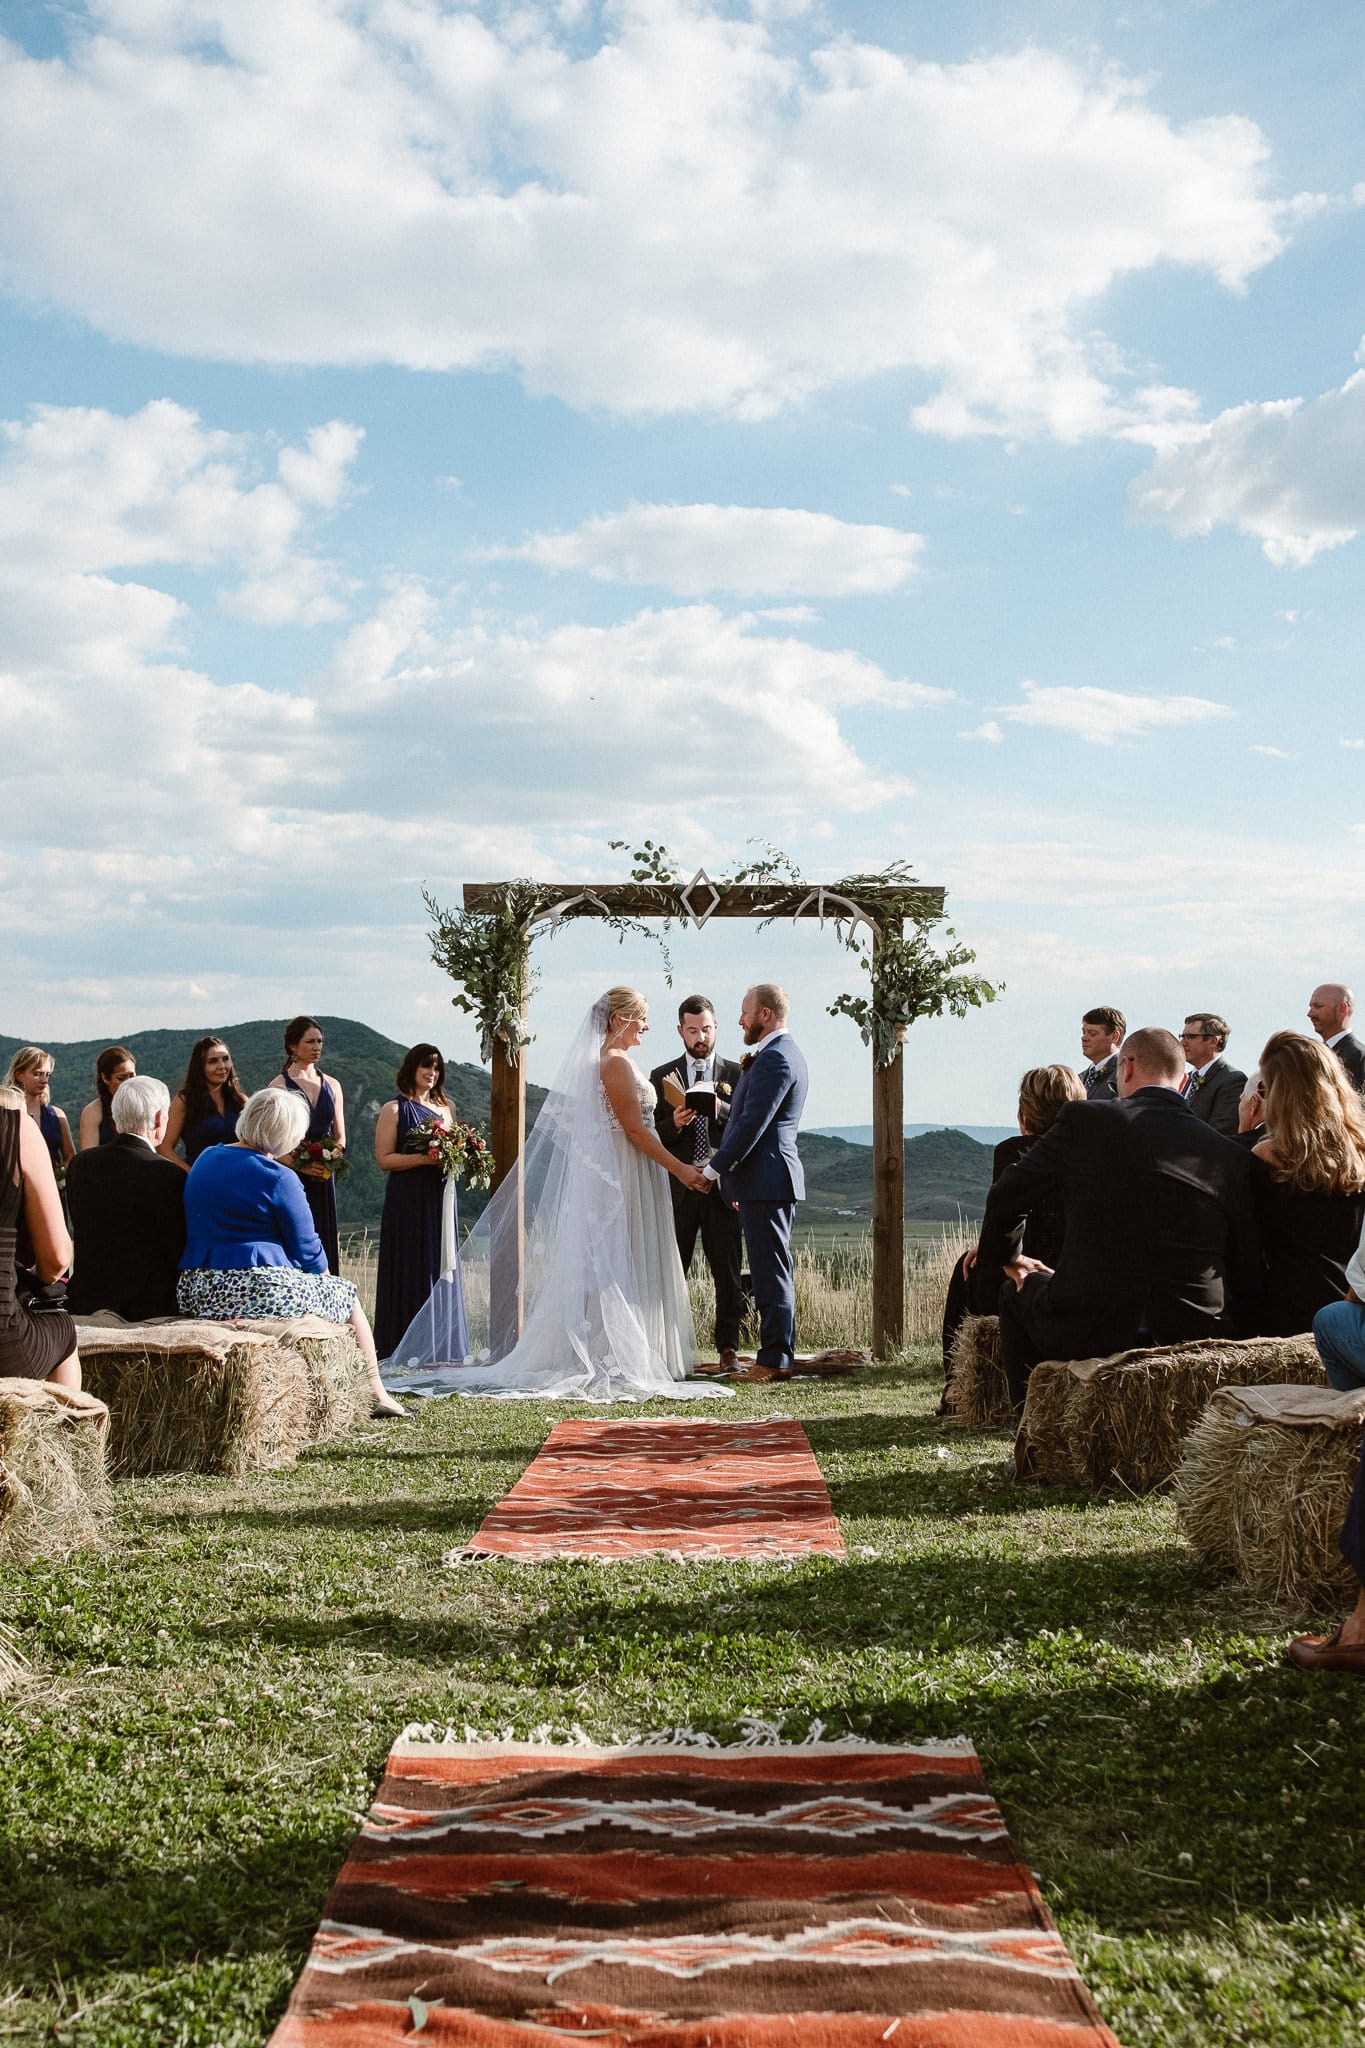 Steamboat Springs wedding photographer, La Joya Dulce wedding, Colorado ranch wedding venues, outdoor wedding ceremony, Colorado wedding, Rocky Mountain wedding, ranch wedding